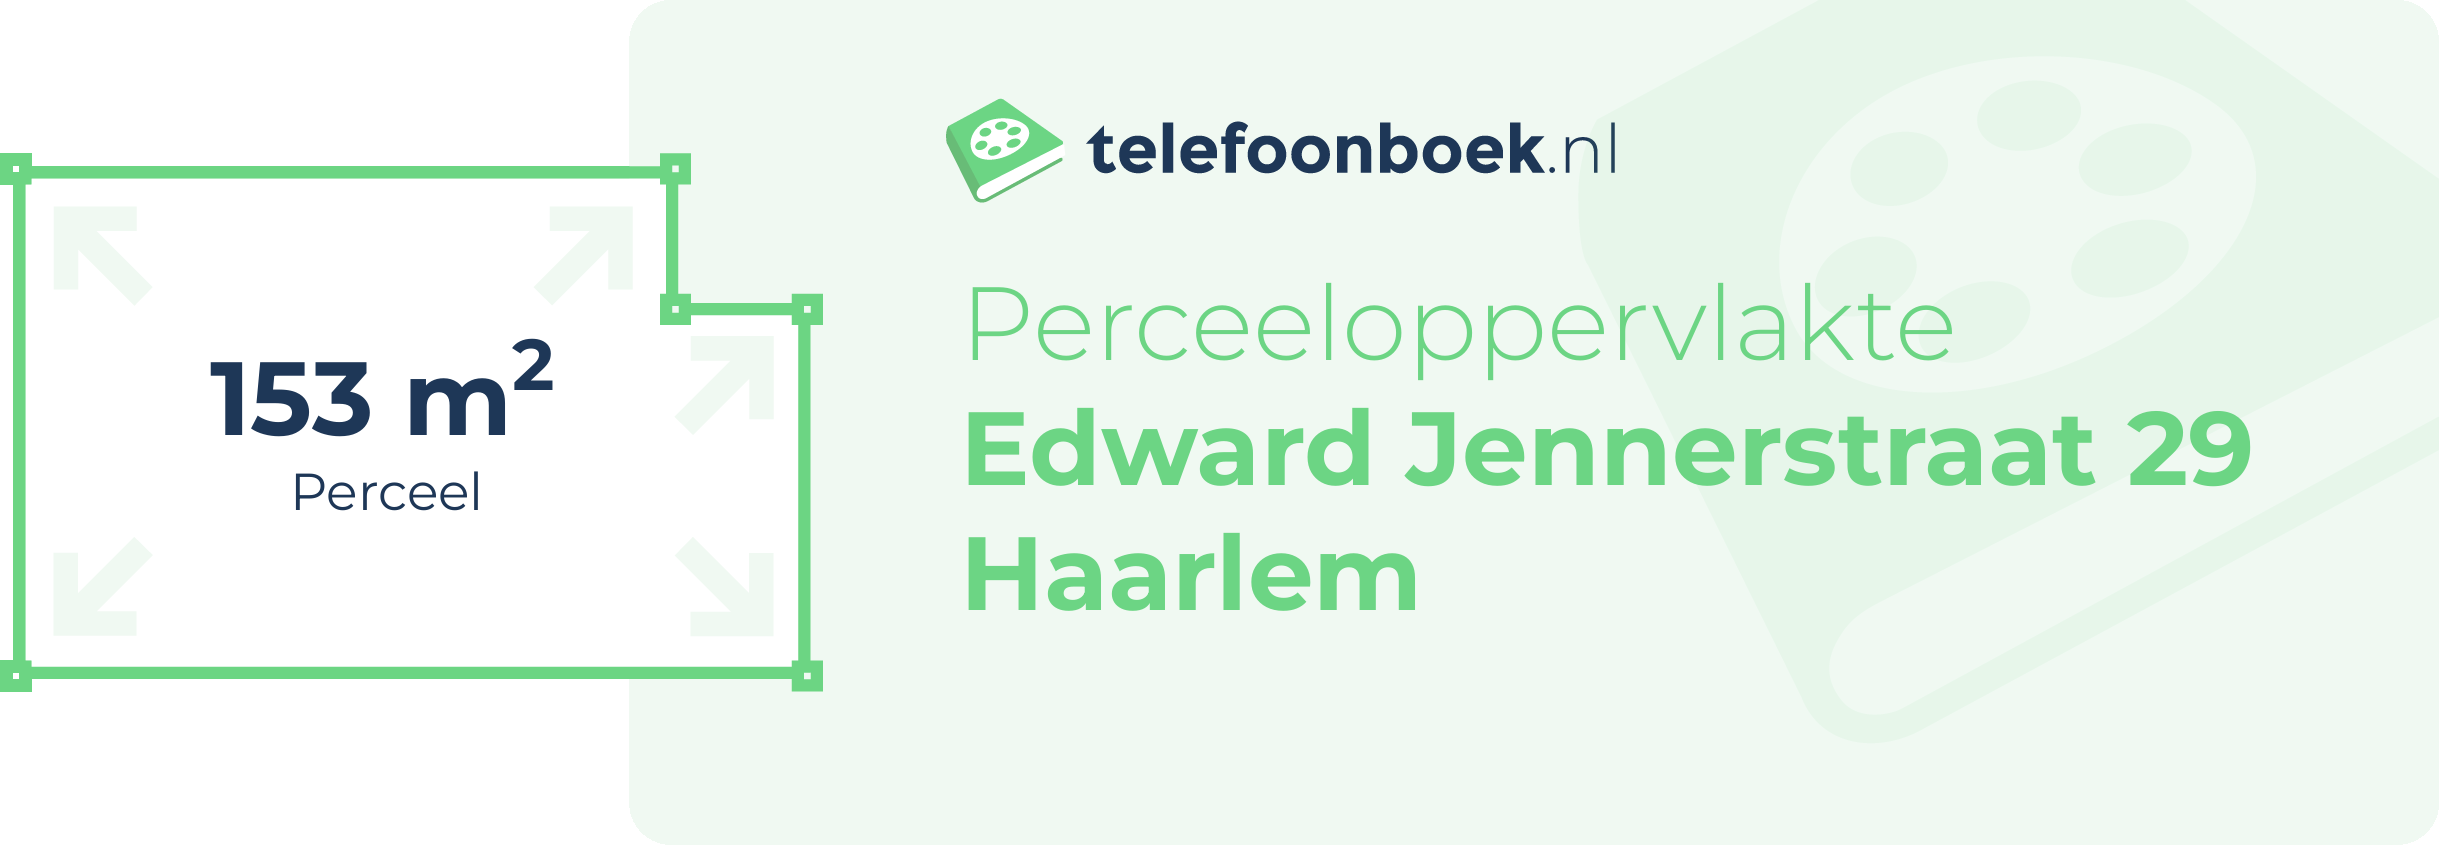 Perceeloppervlakte Edward Jennerstraat 29 Haarlem